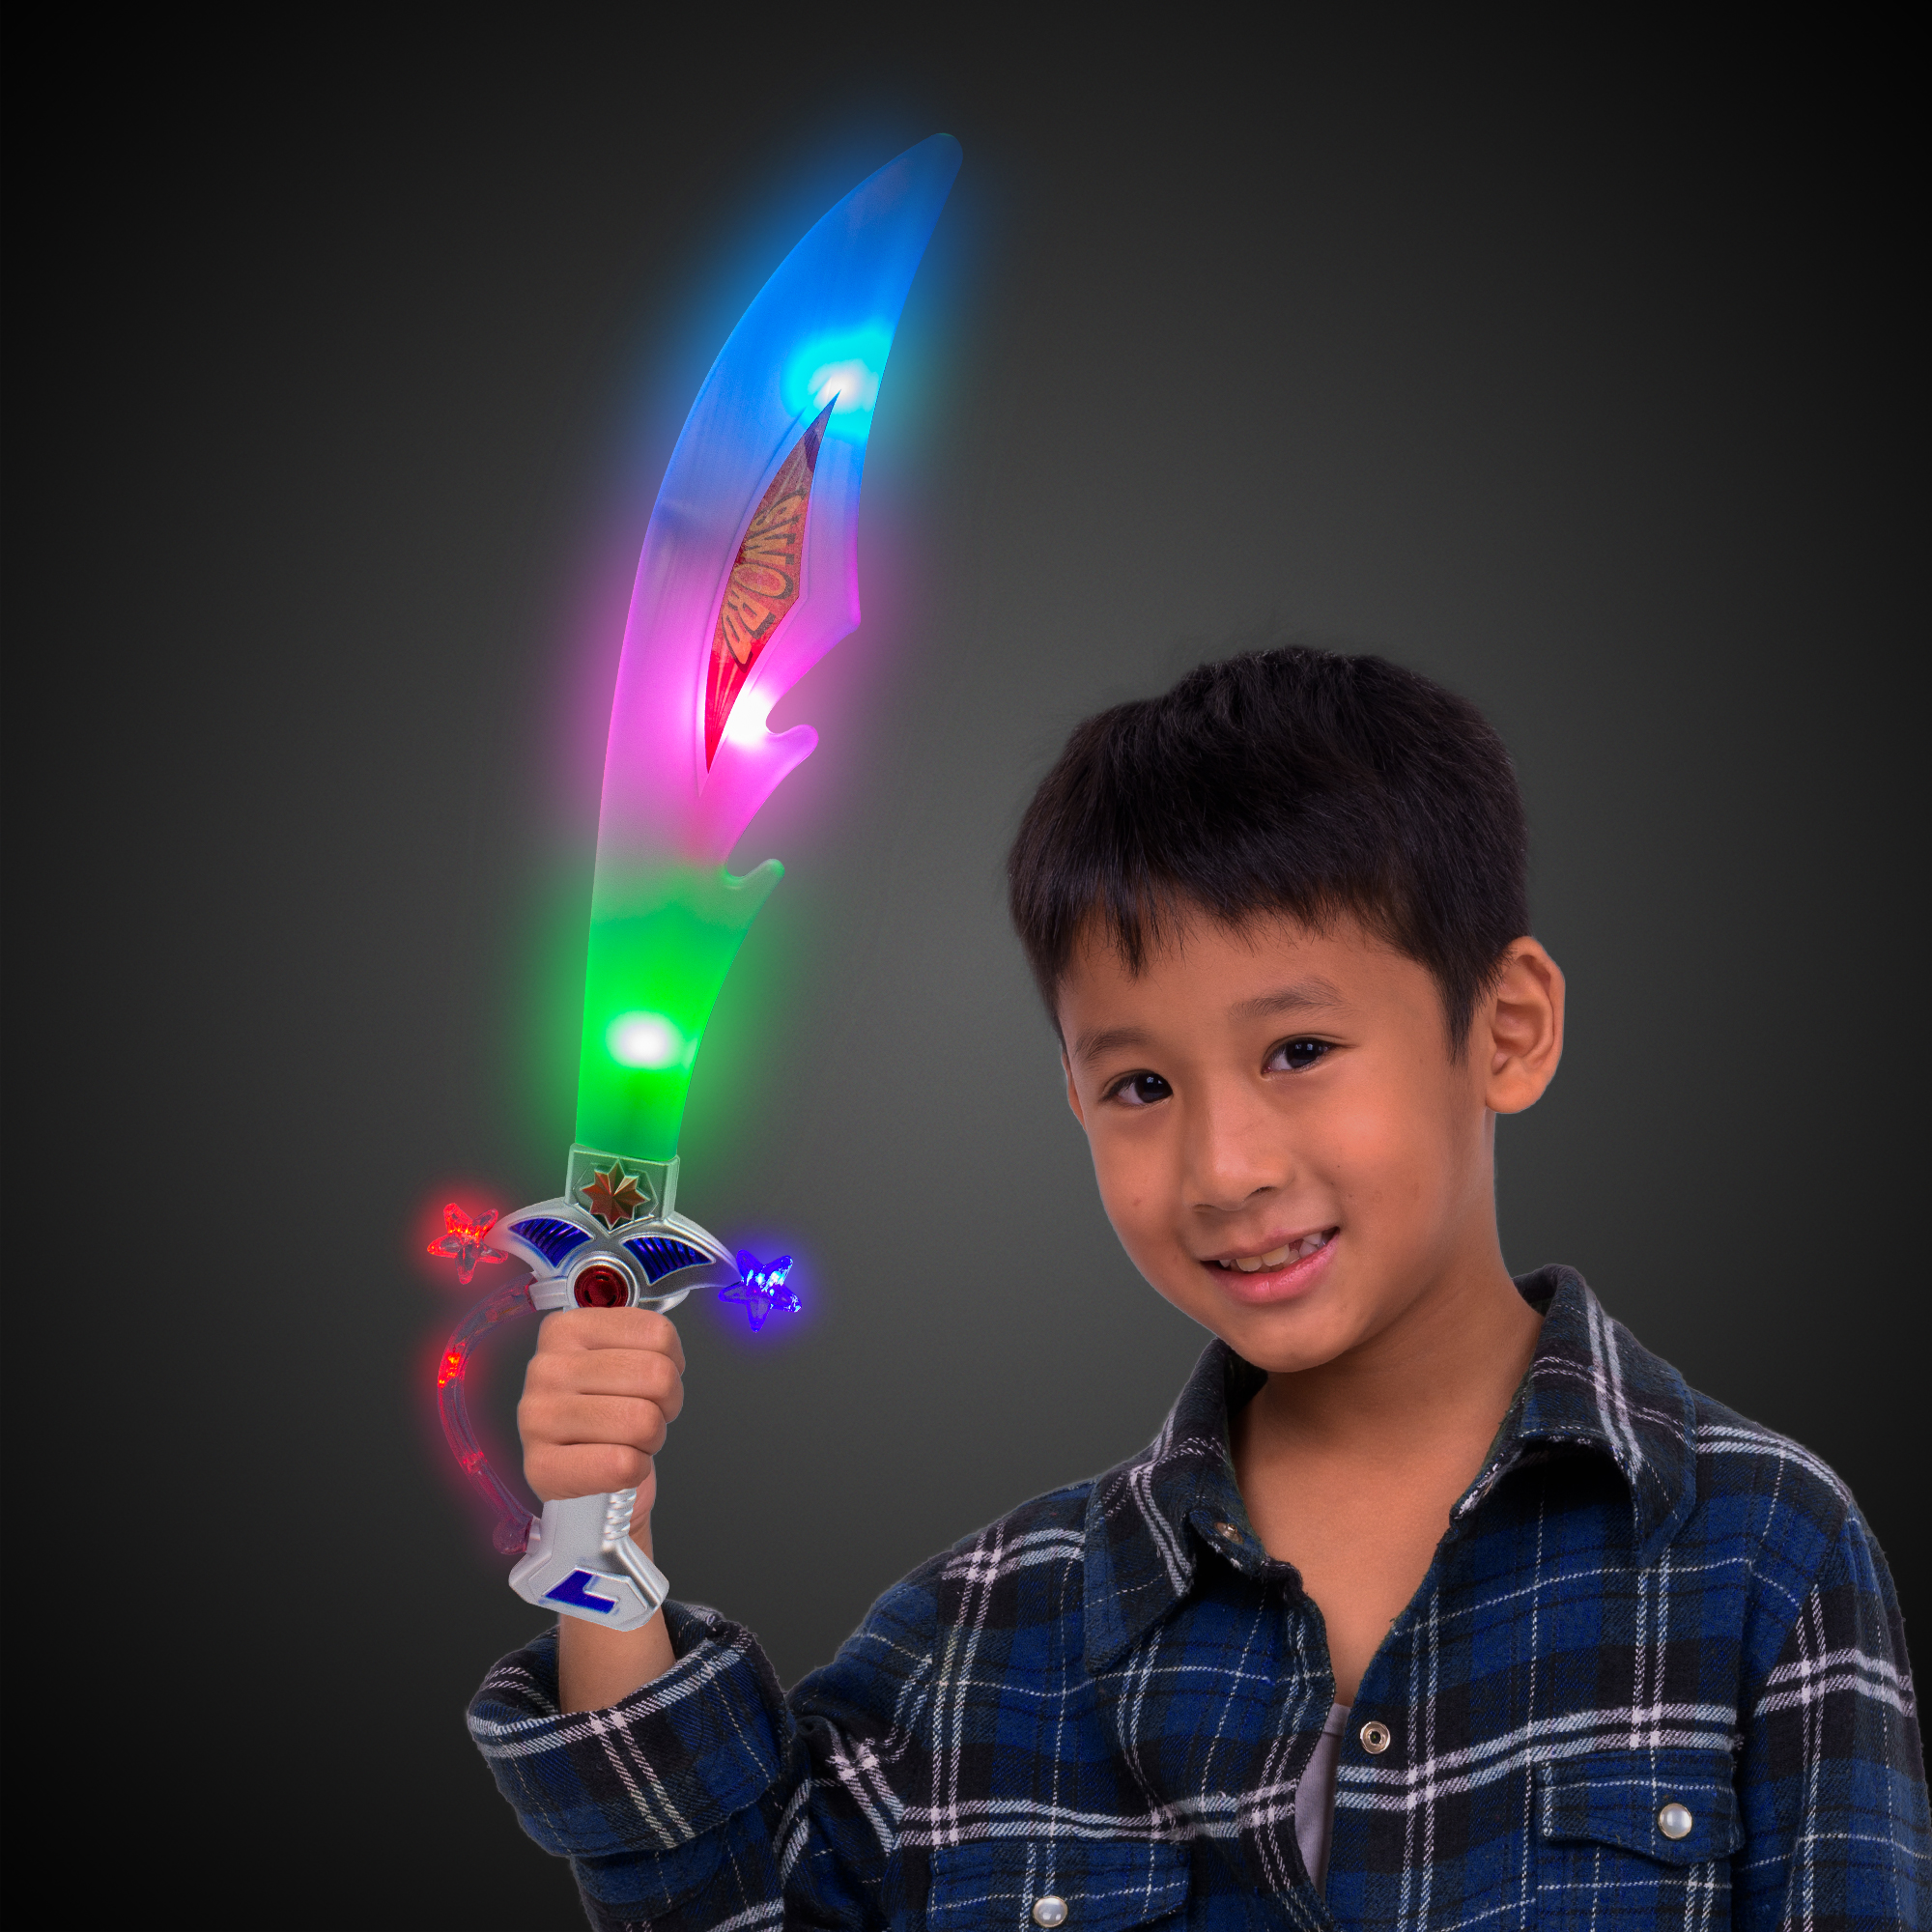 LED Pirate Sword